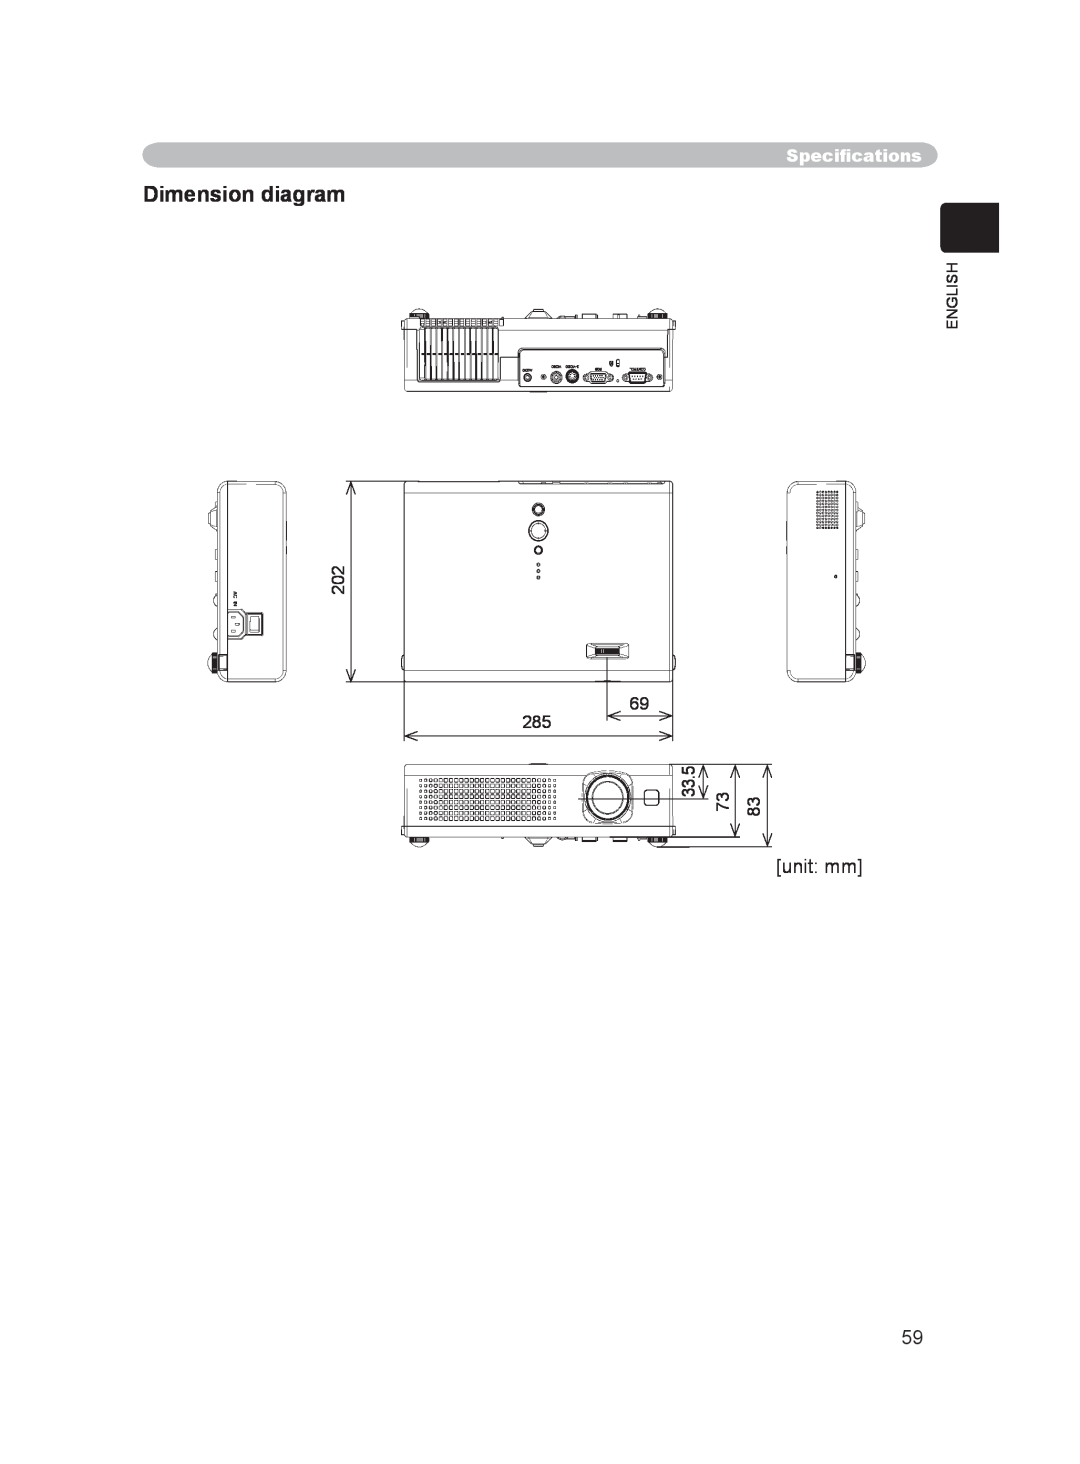 Hitachi EDPJ32 user manual Dimension diagram, 202 285, Speciﬁcations, 33.5, English 